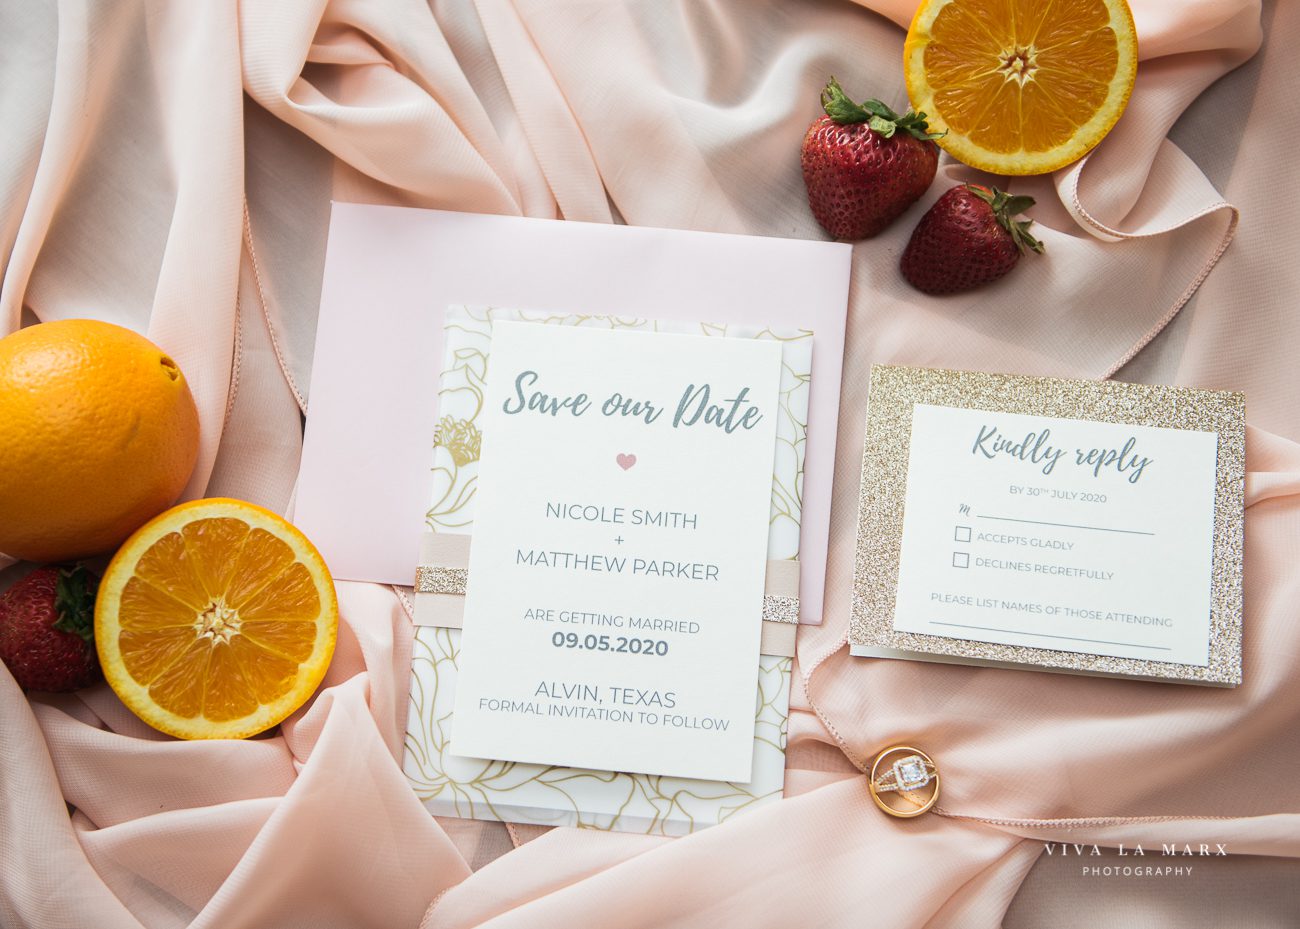 Wedding invitation, rings, strawberries, and, oranges